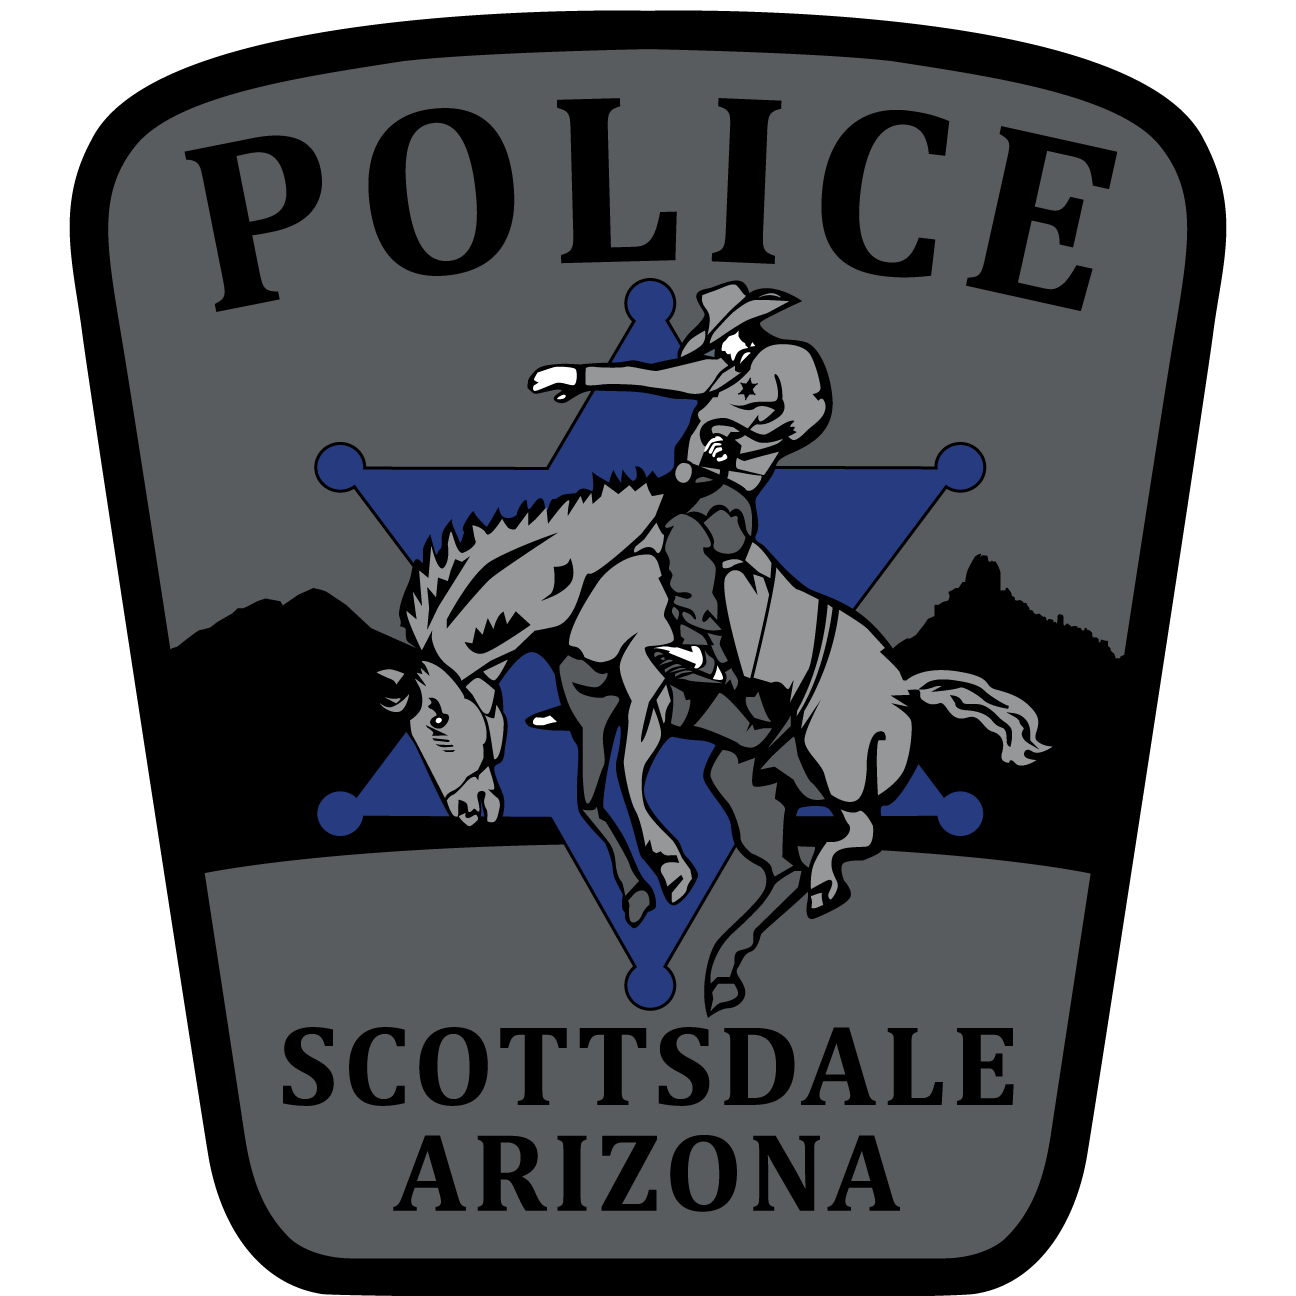 Police Patch Logo